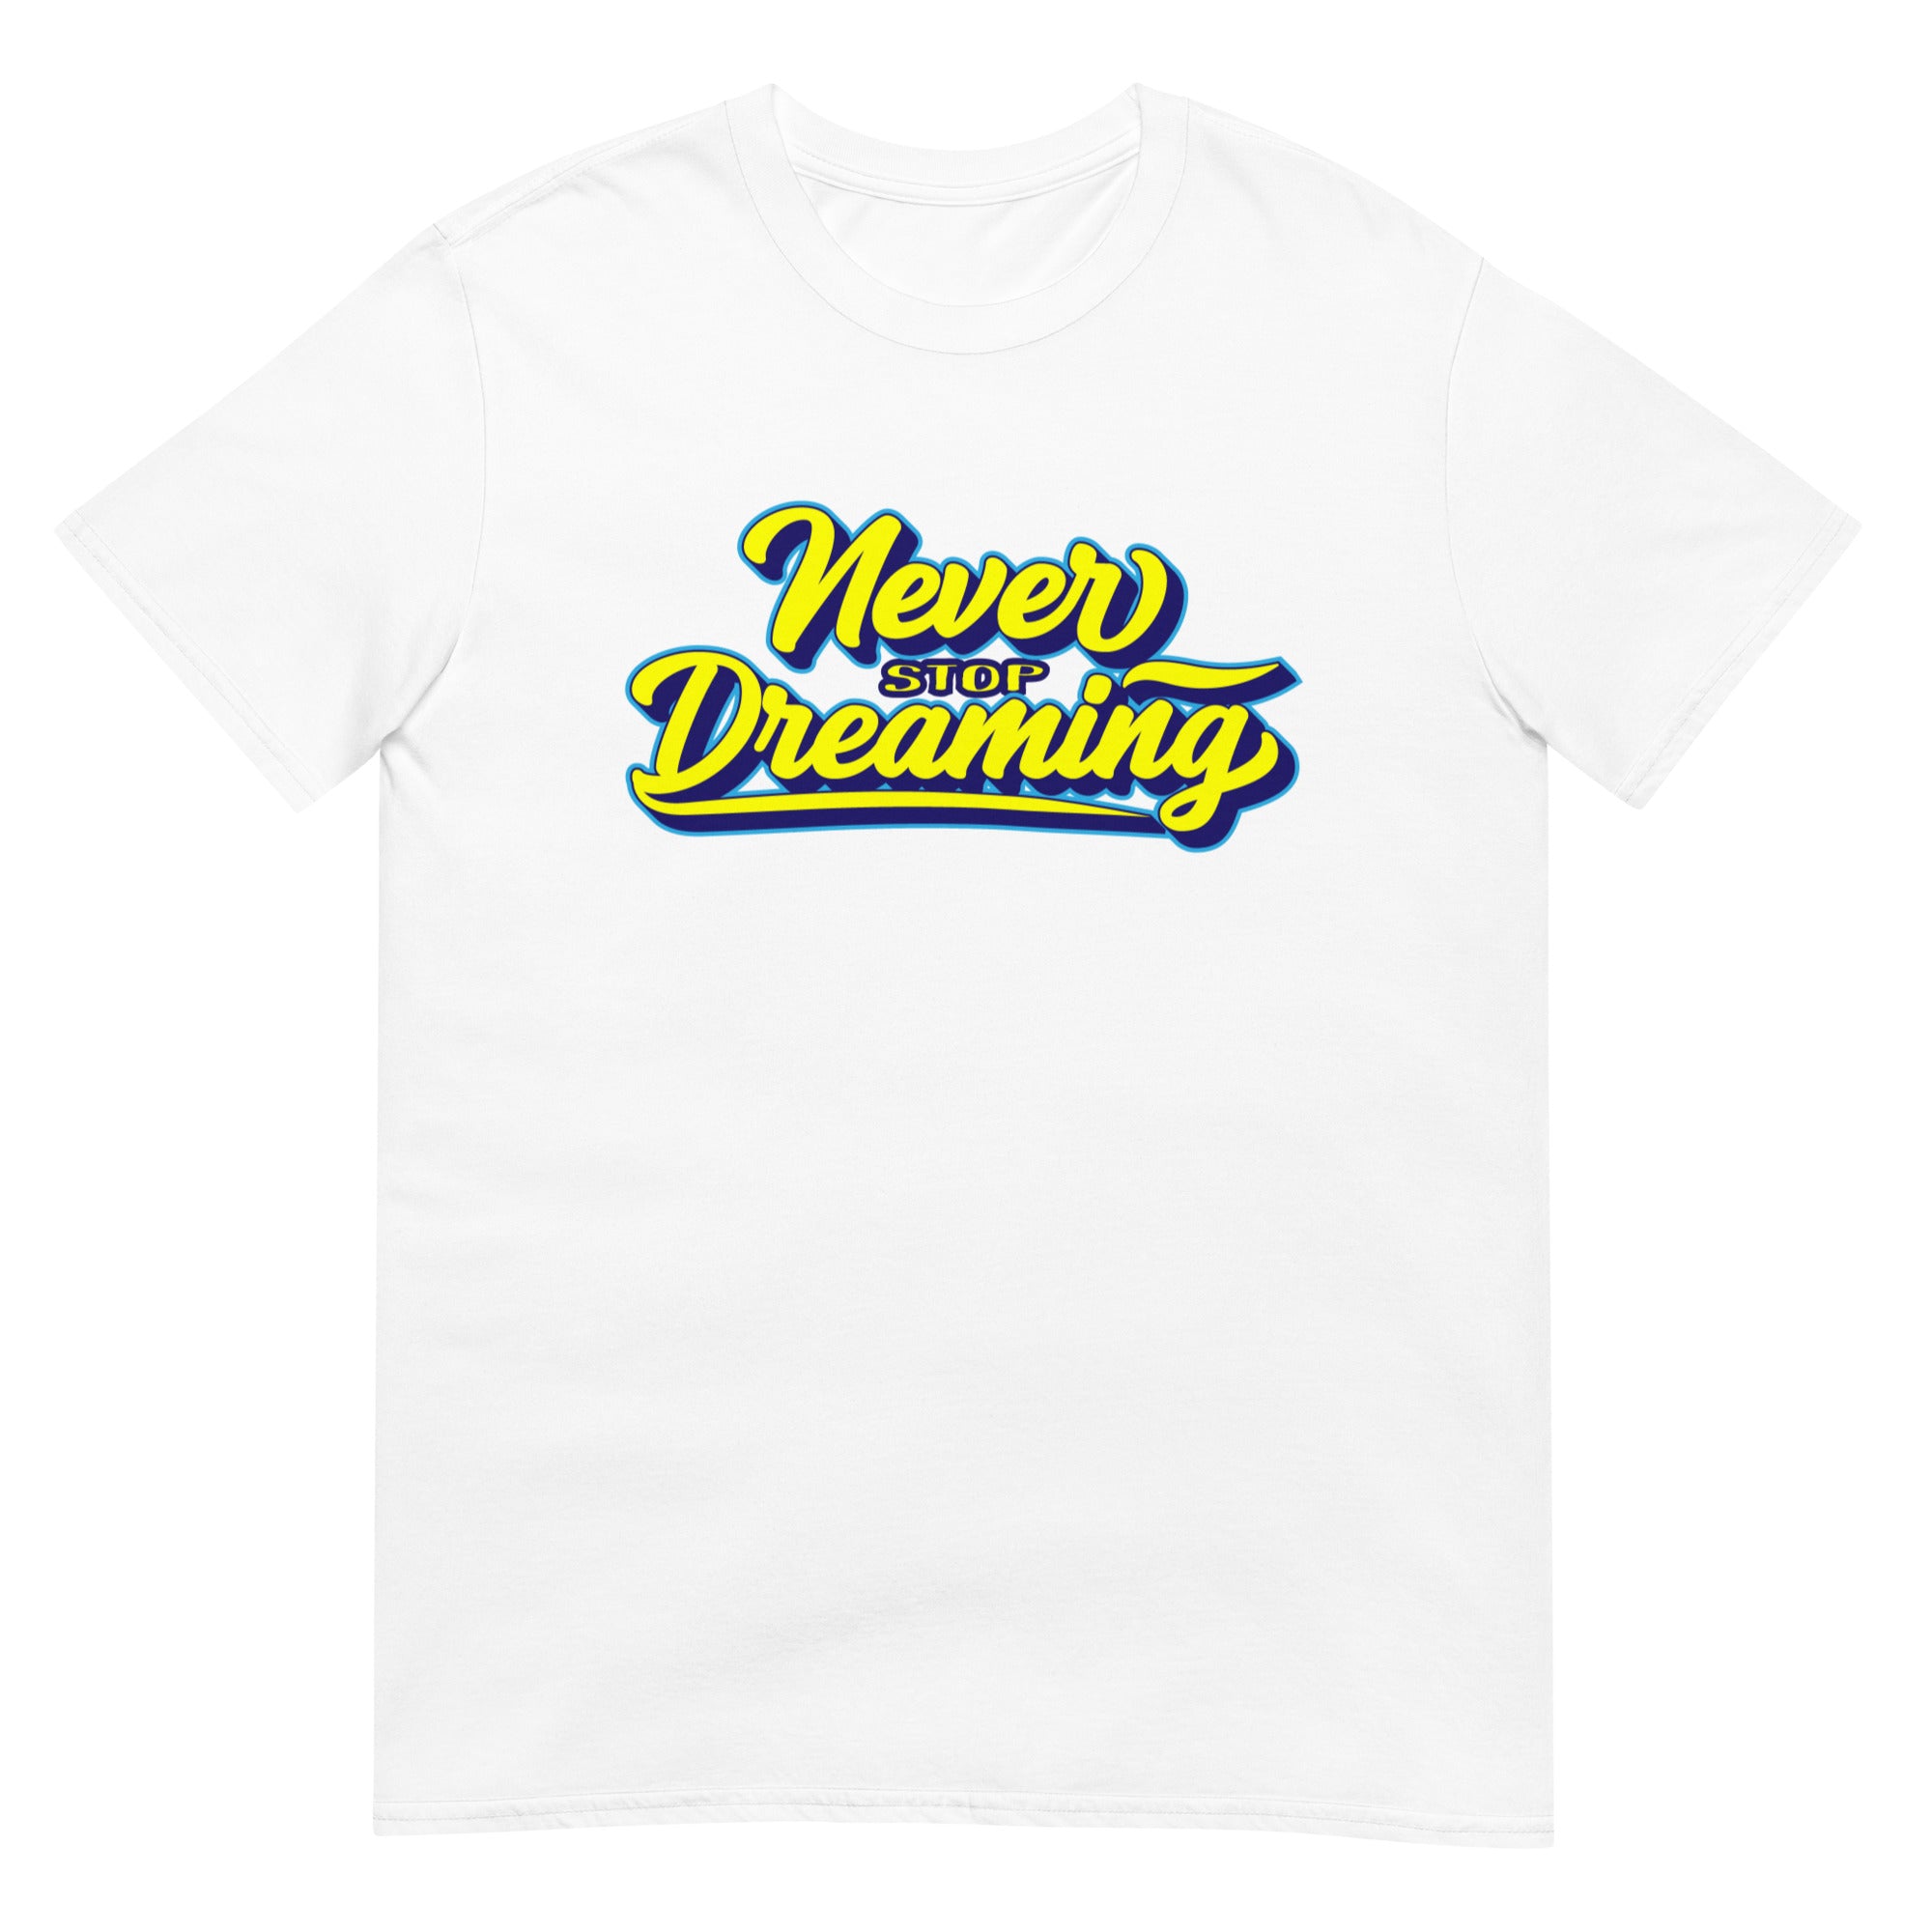 Never Stop Dreaming - Short-Sleeve Unisex T-Shirt